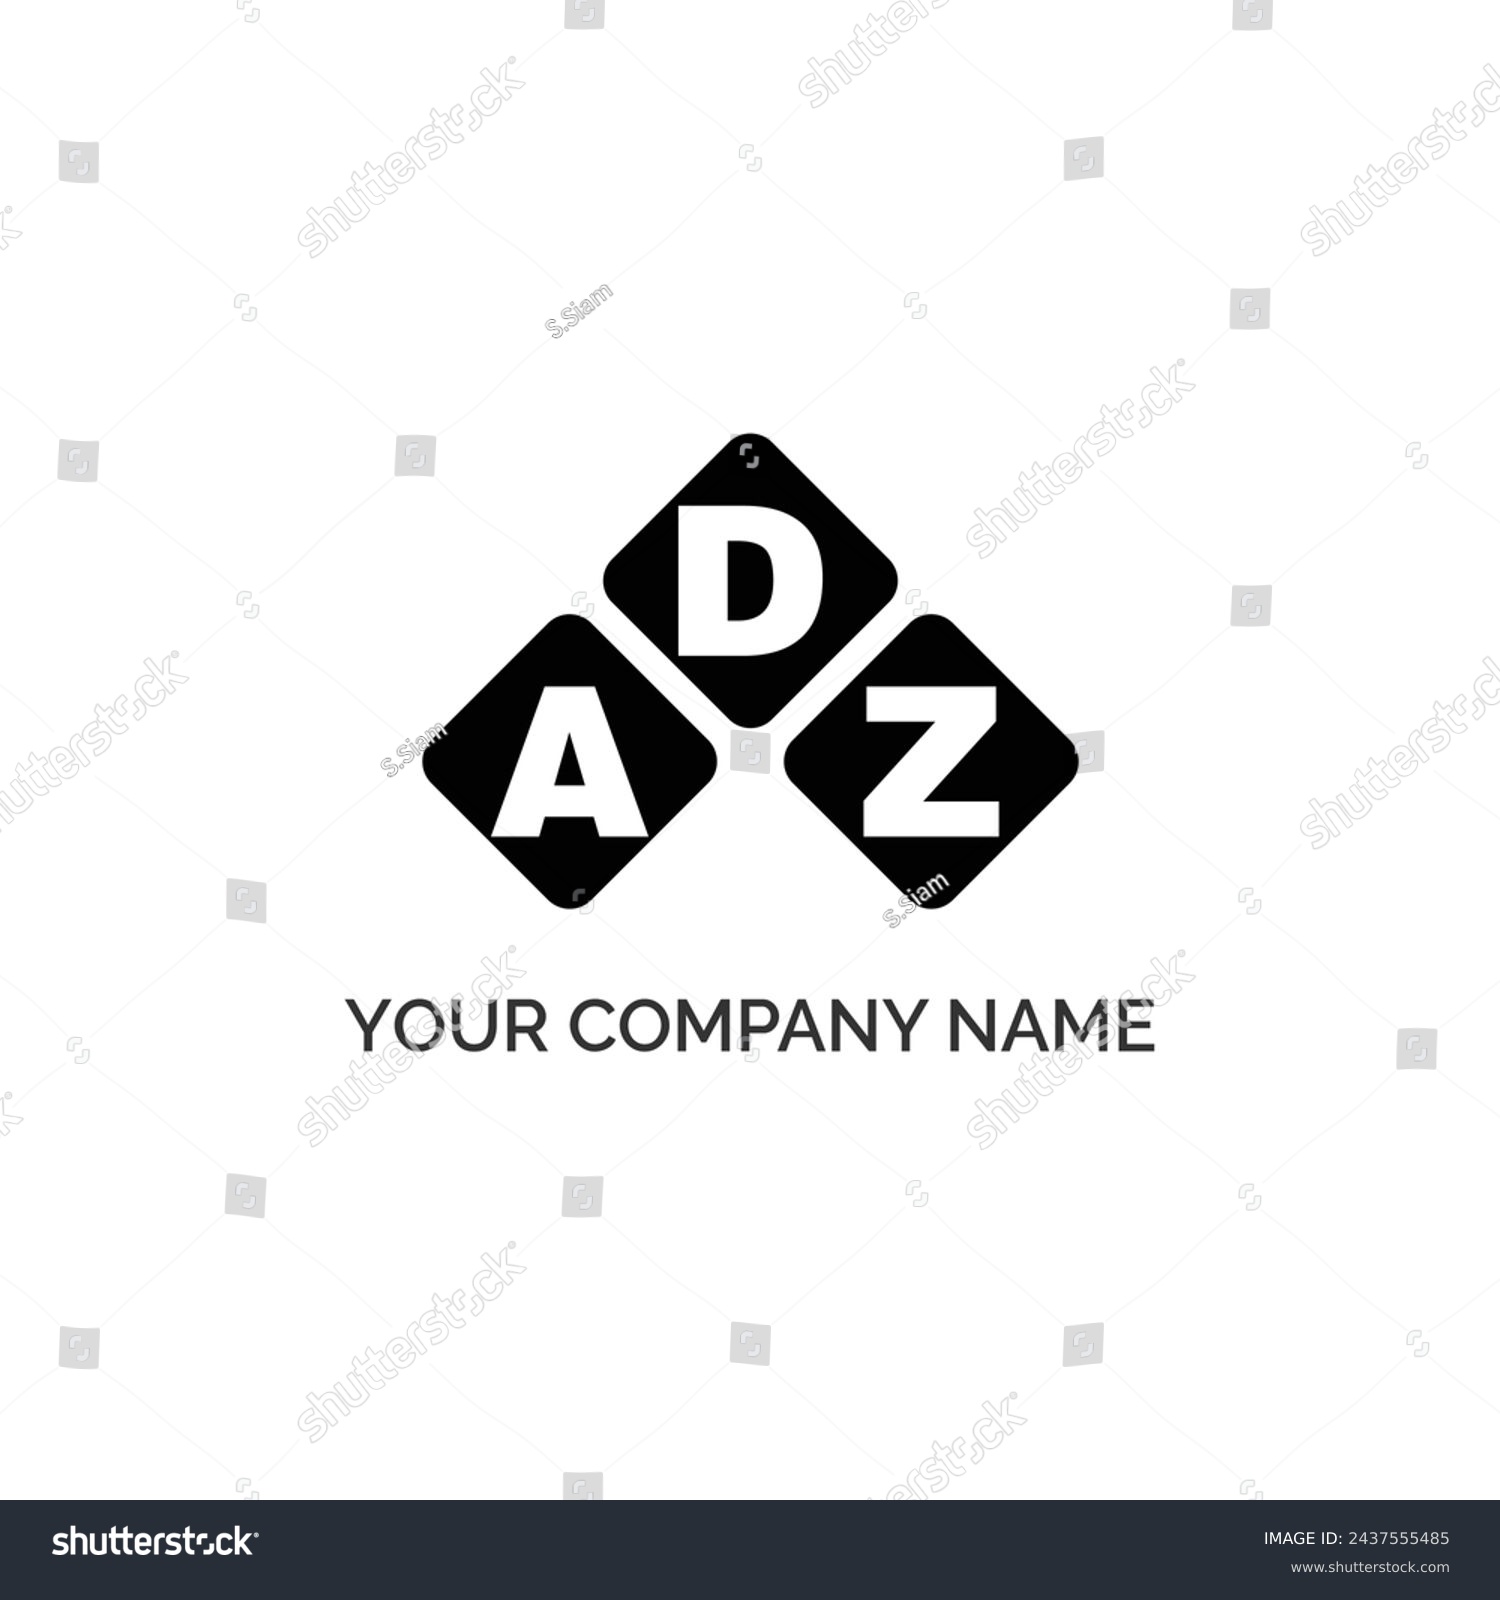 SVG of ADZ letter logo design on white background. ADZ logo. ADZ creative initials letter Monogram logo icon concept. ADZ letter design svg